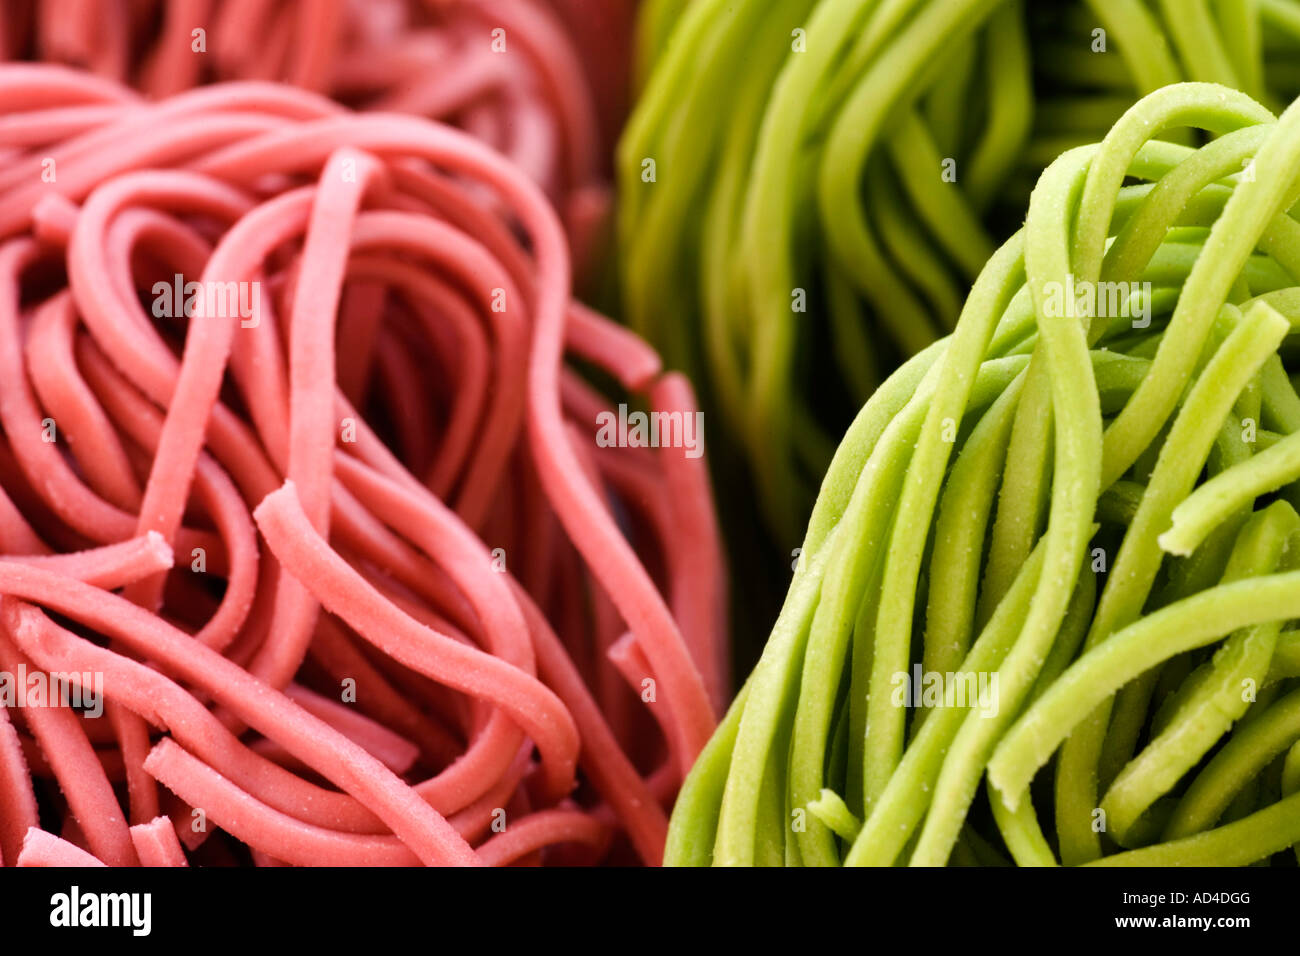 Multicolored noodles Stock Photo